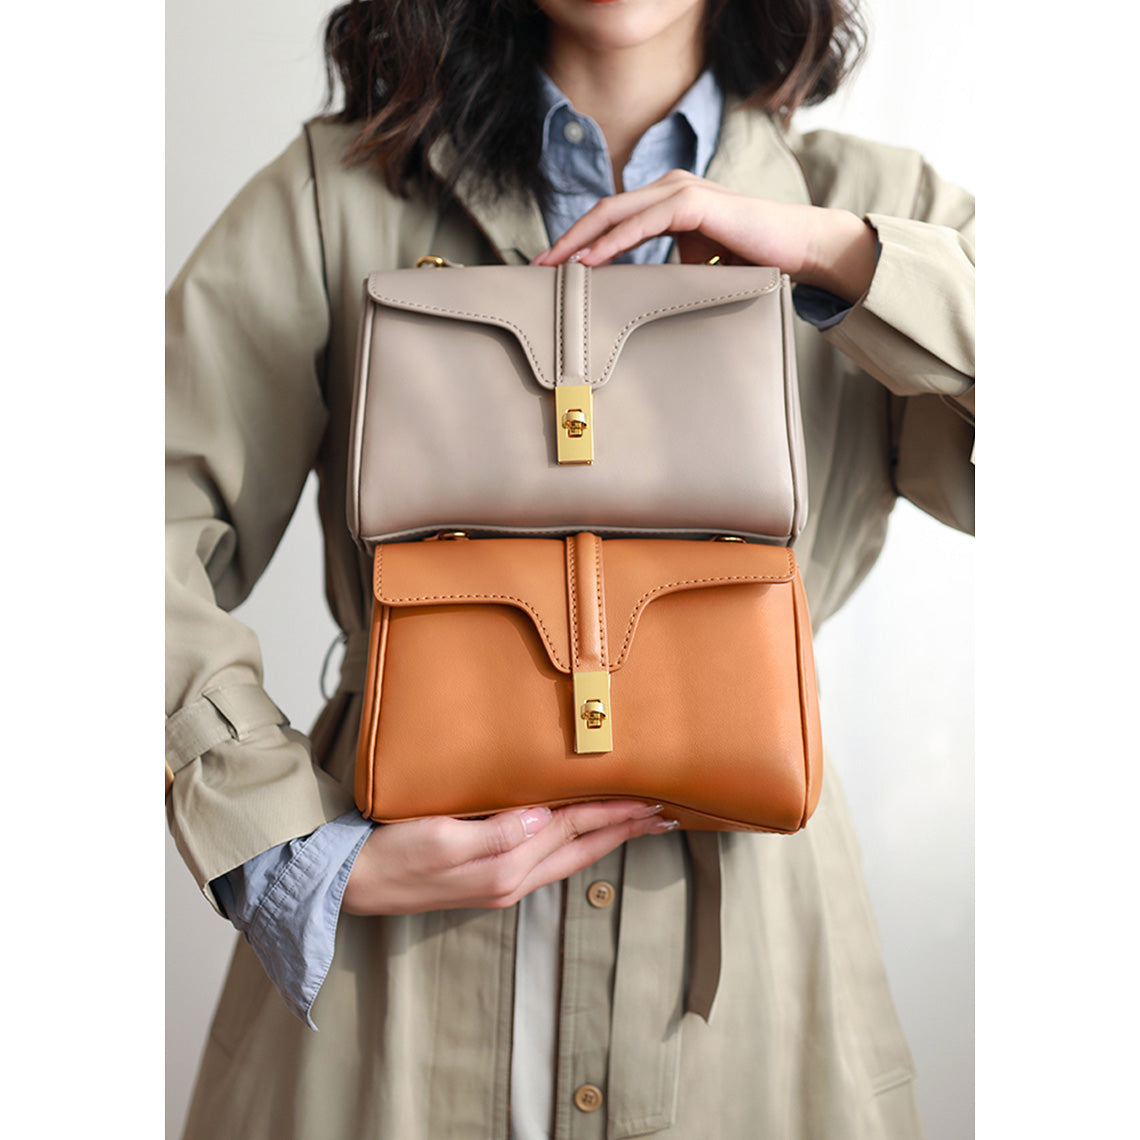 POPSEWING Pocket Handbags DIY Tote Kit for Girls, Leather Working Kit for  Adults, DIY Bag Kit with S…See more POPSEWING Pocket Handbags DIY Tote Kit